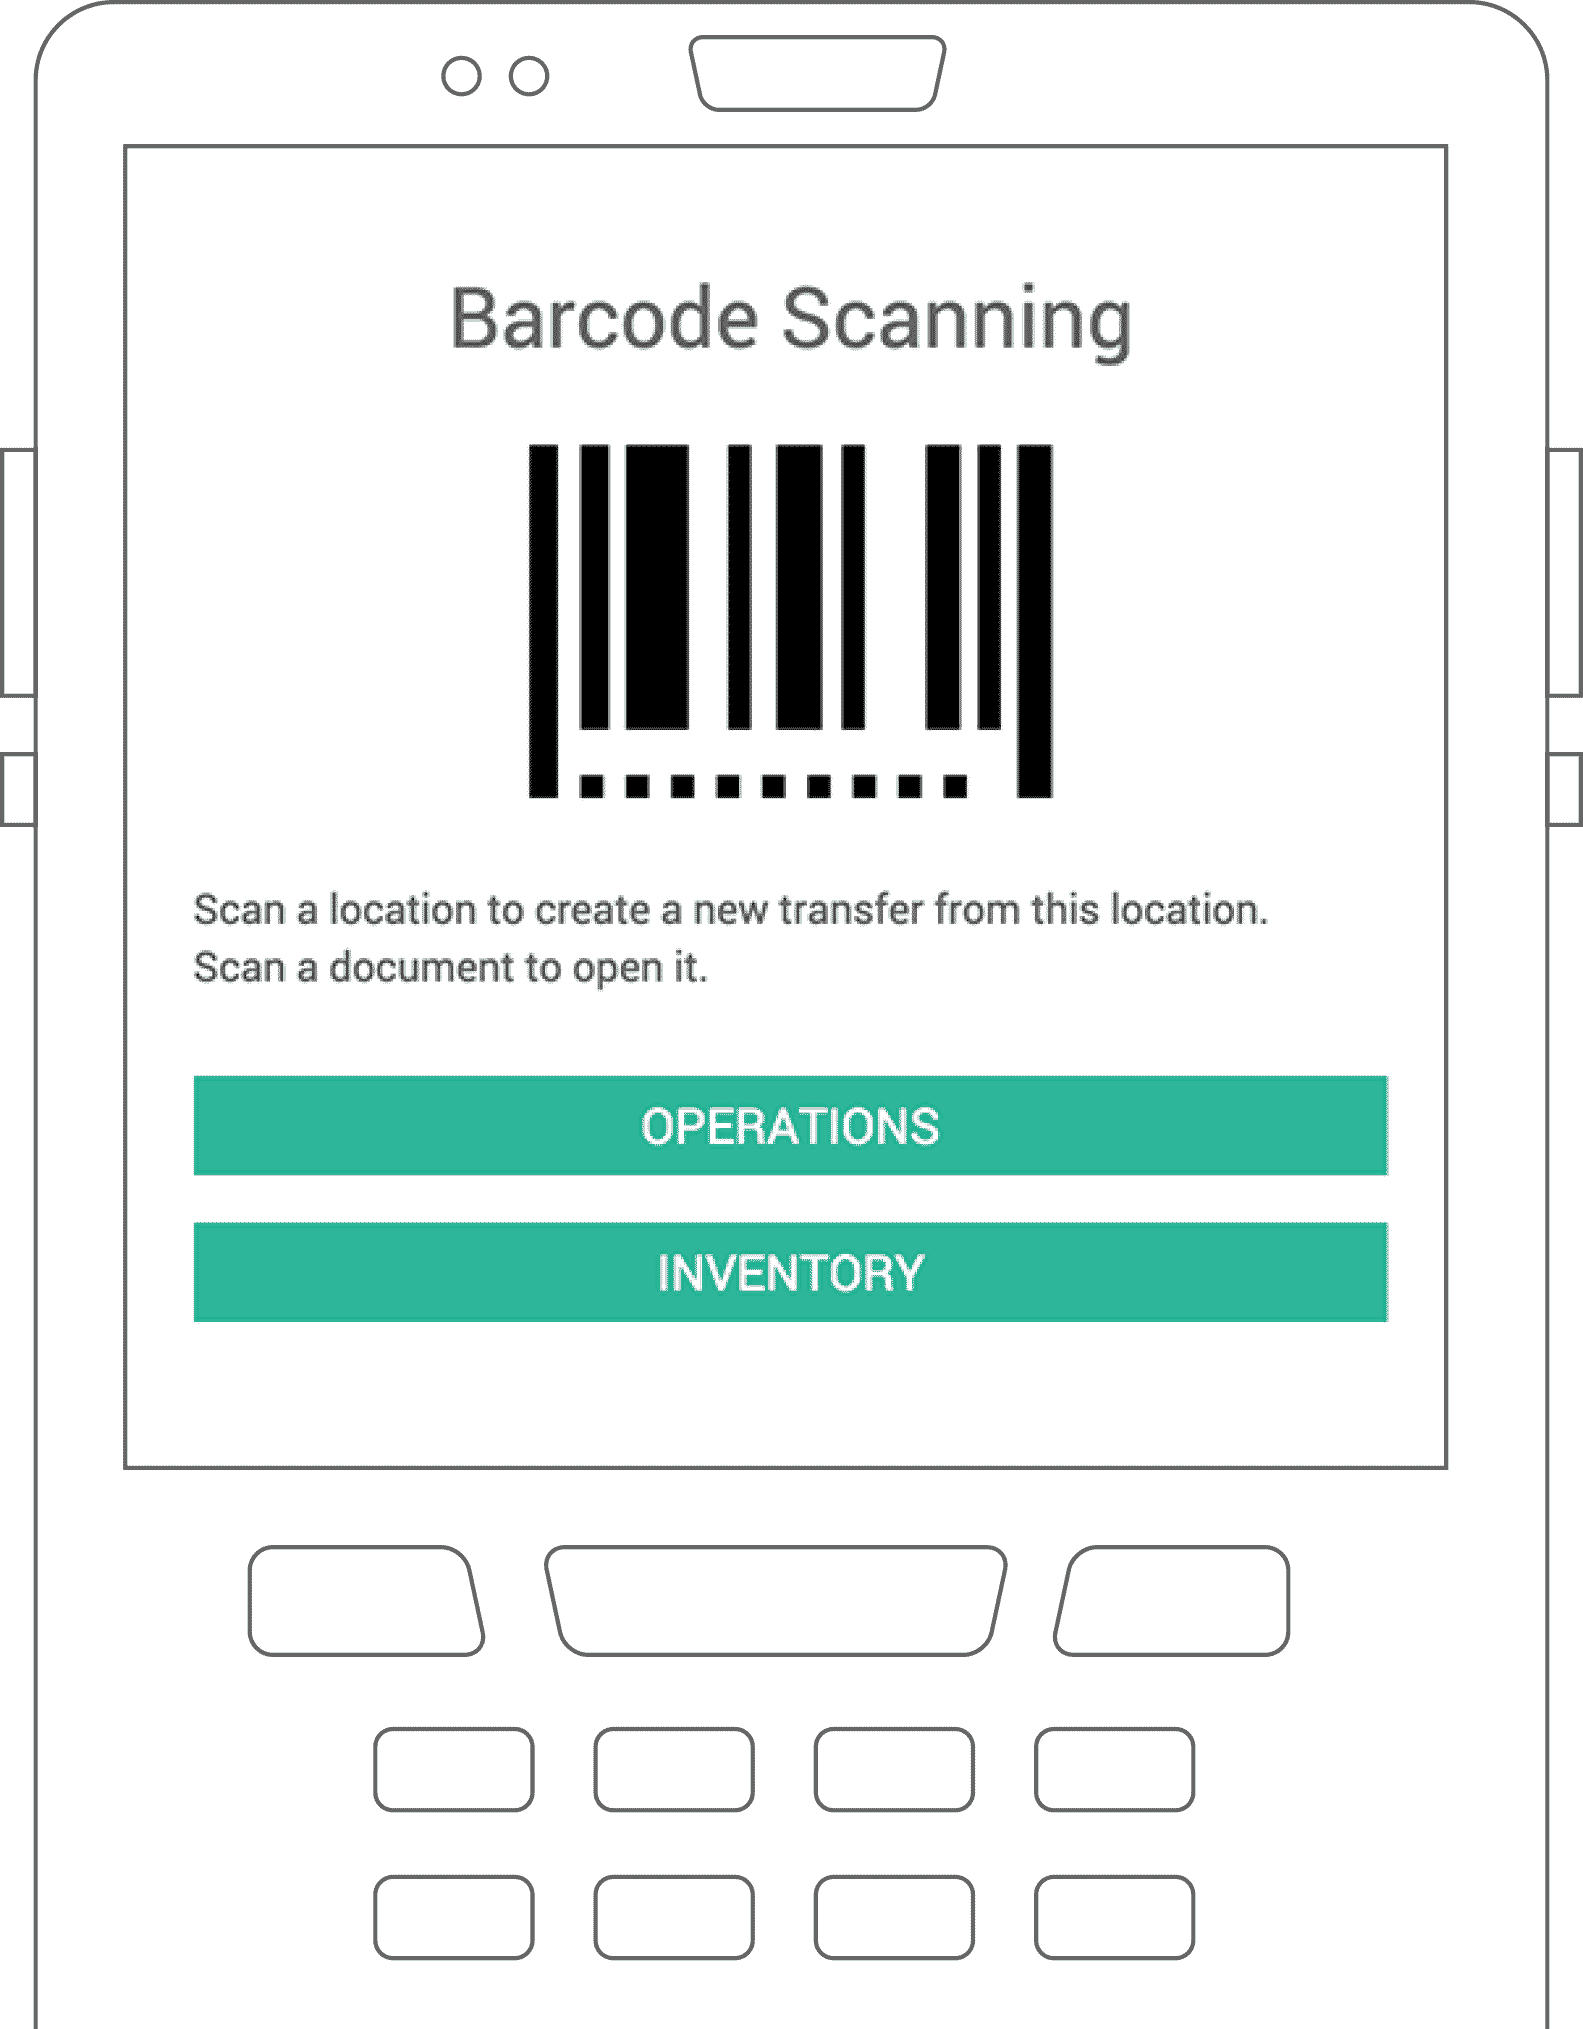 A barcode scanner